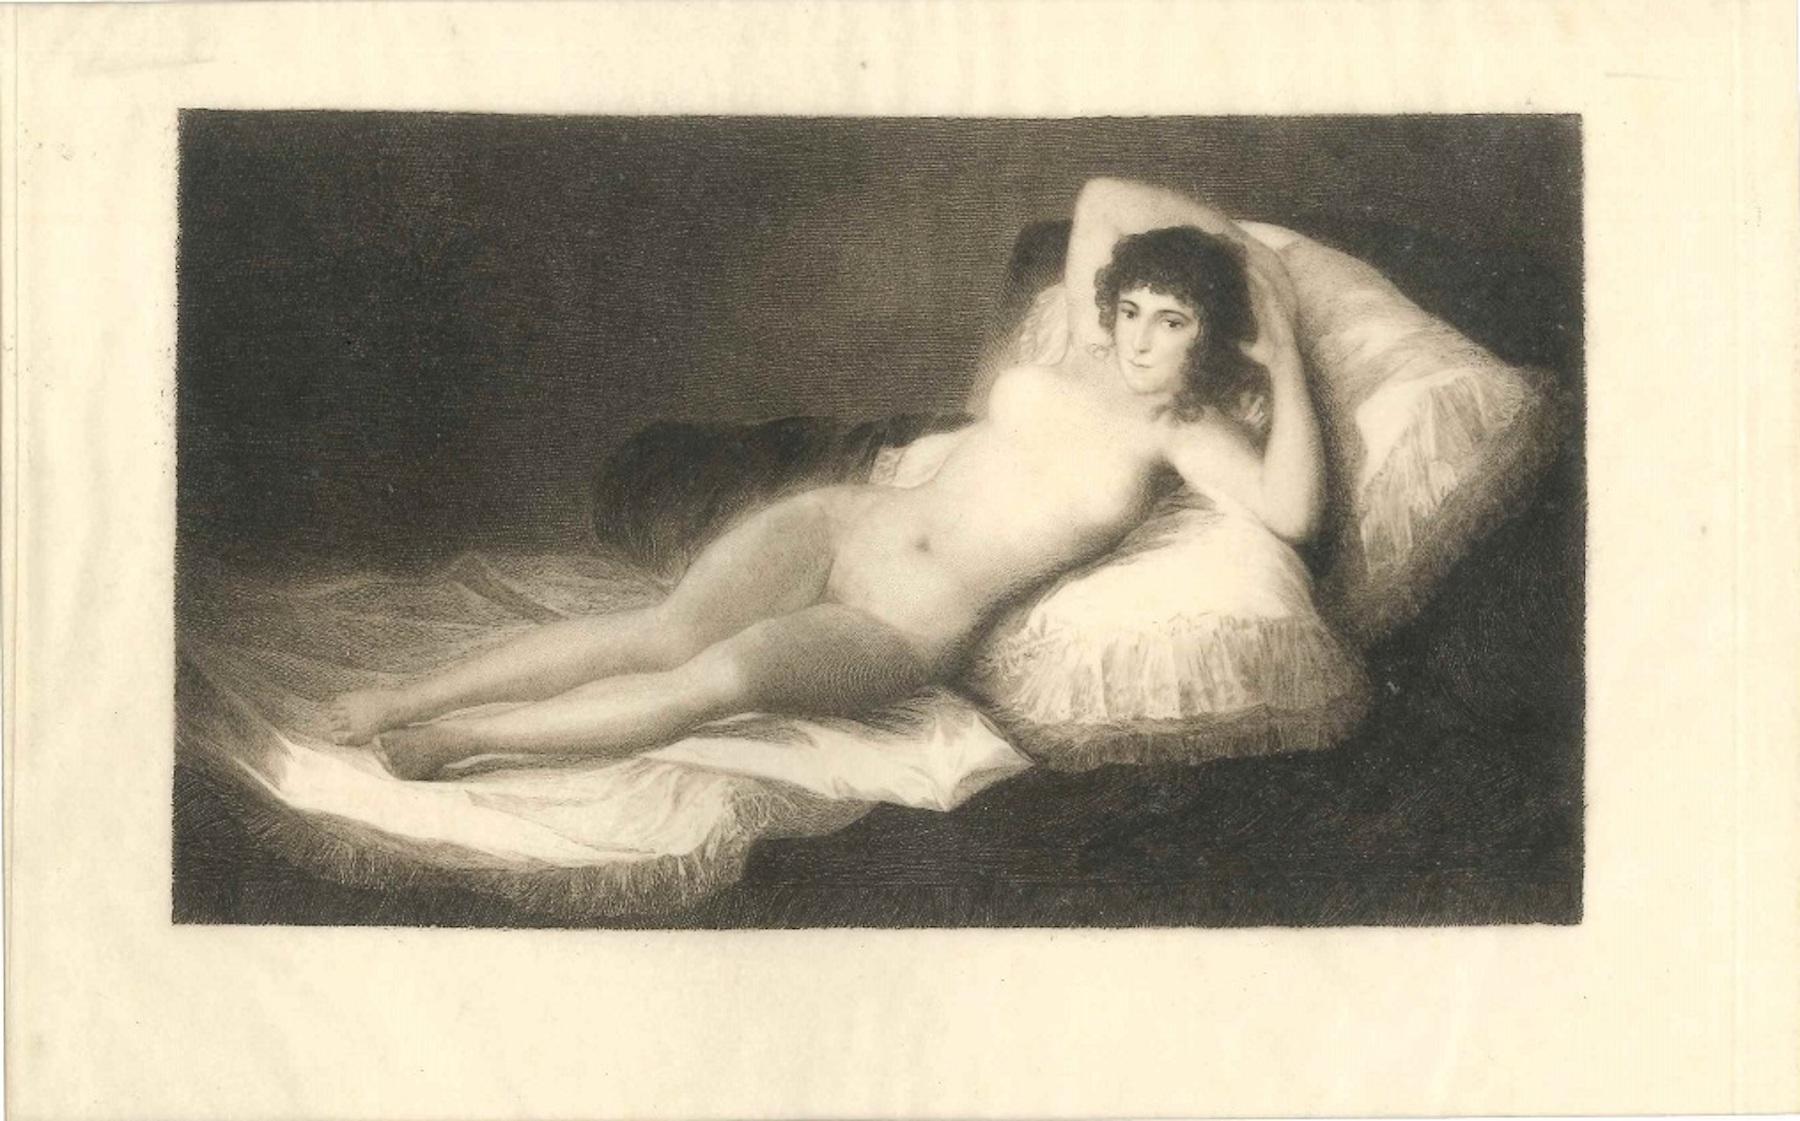 Charles Albert Waltner Nude Print - La Maja - Original Etching by C.A. Waltner After F. Goya - End of 1800